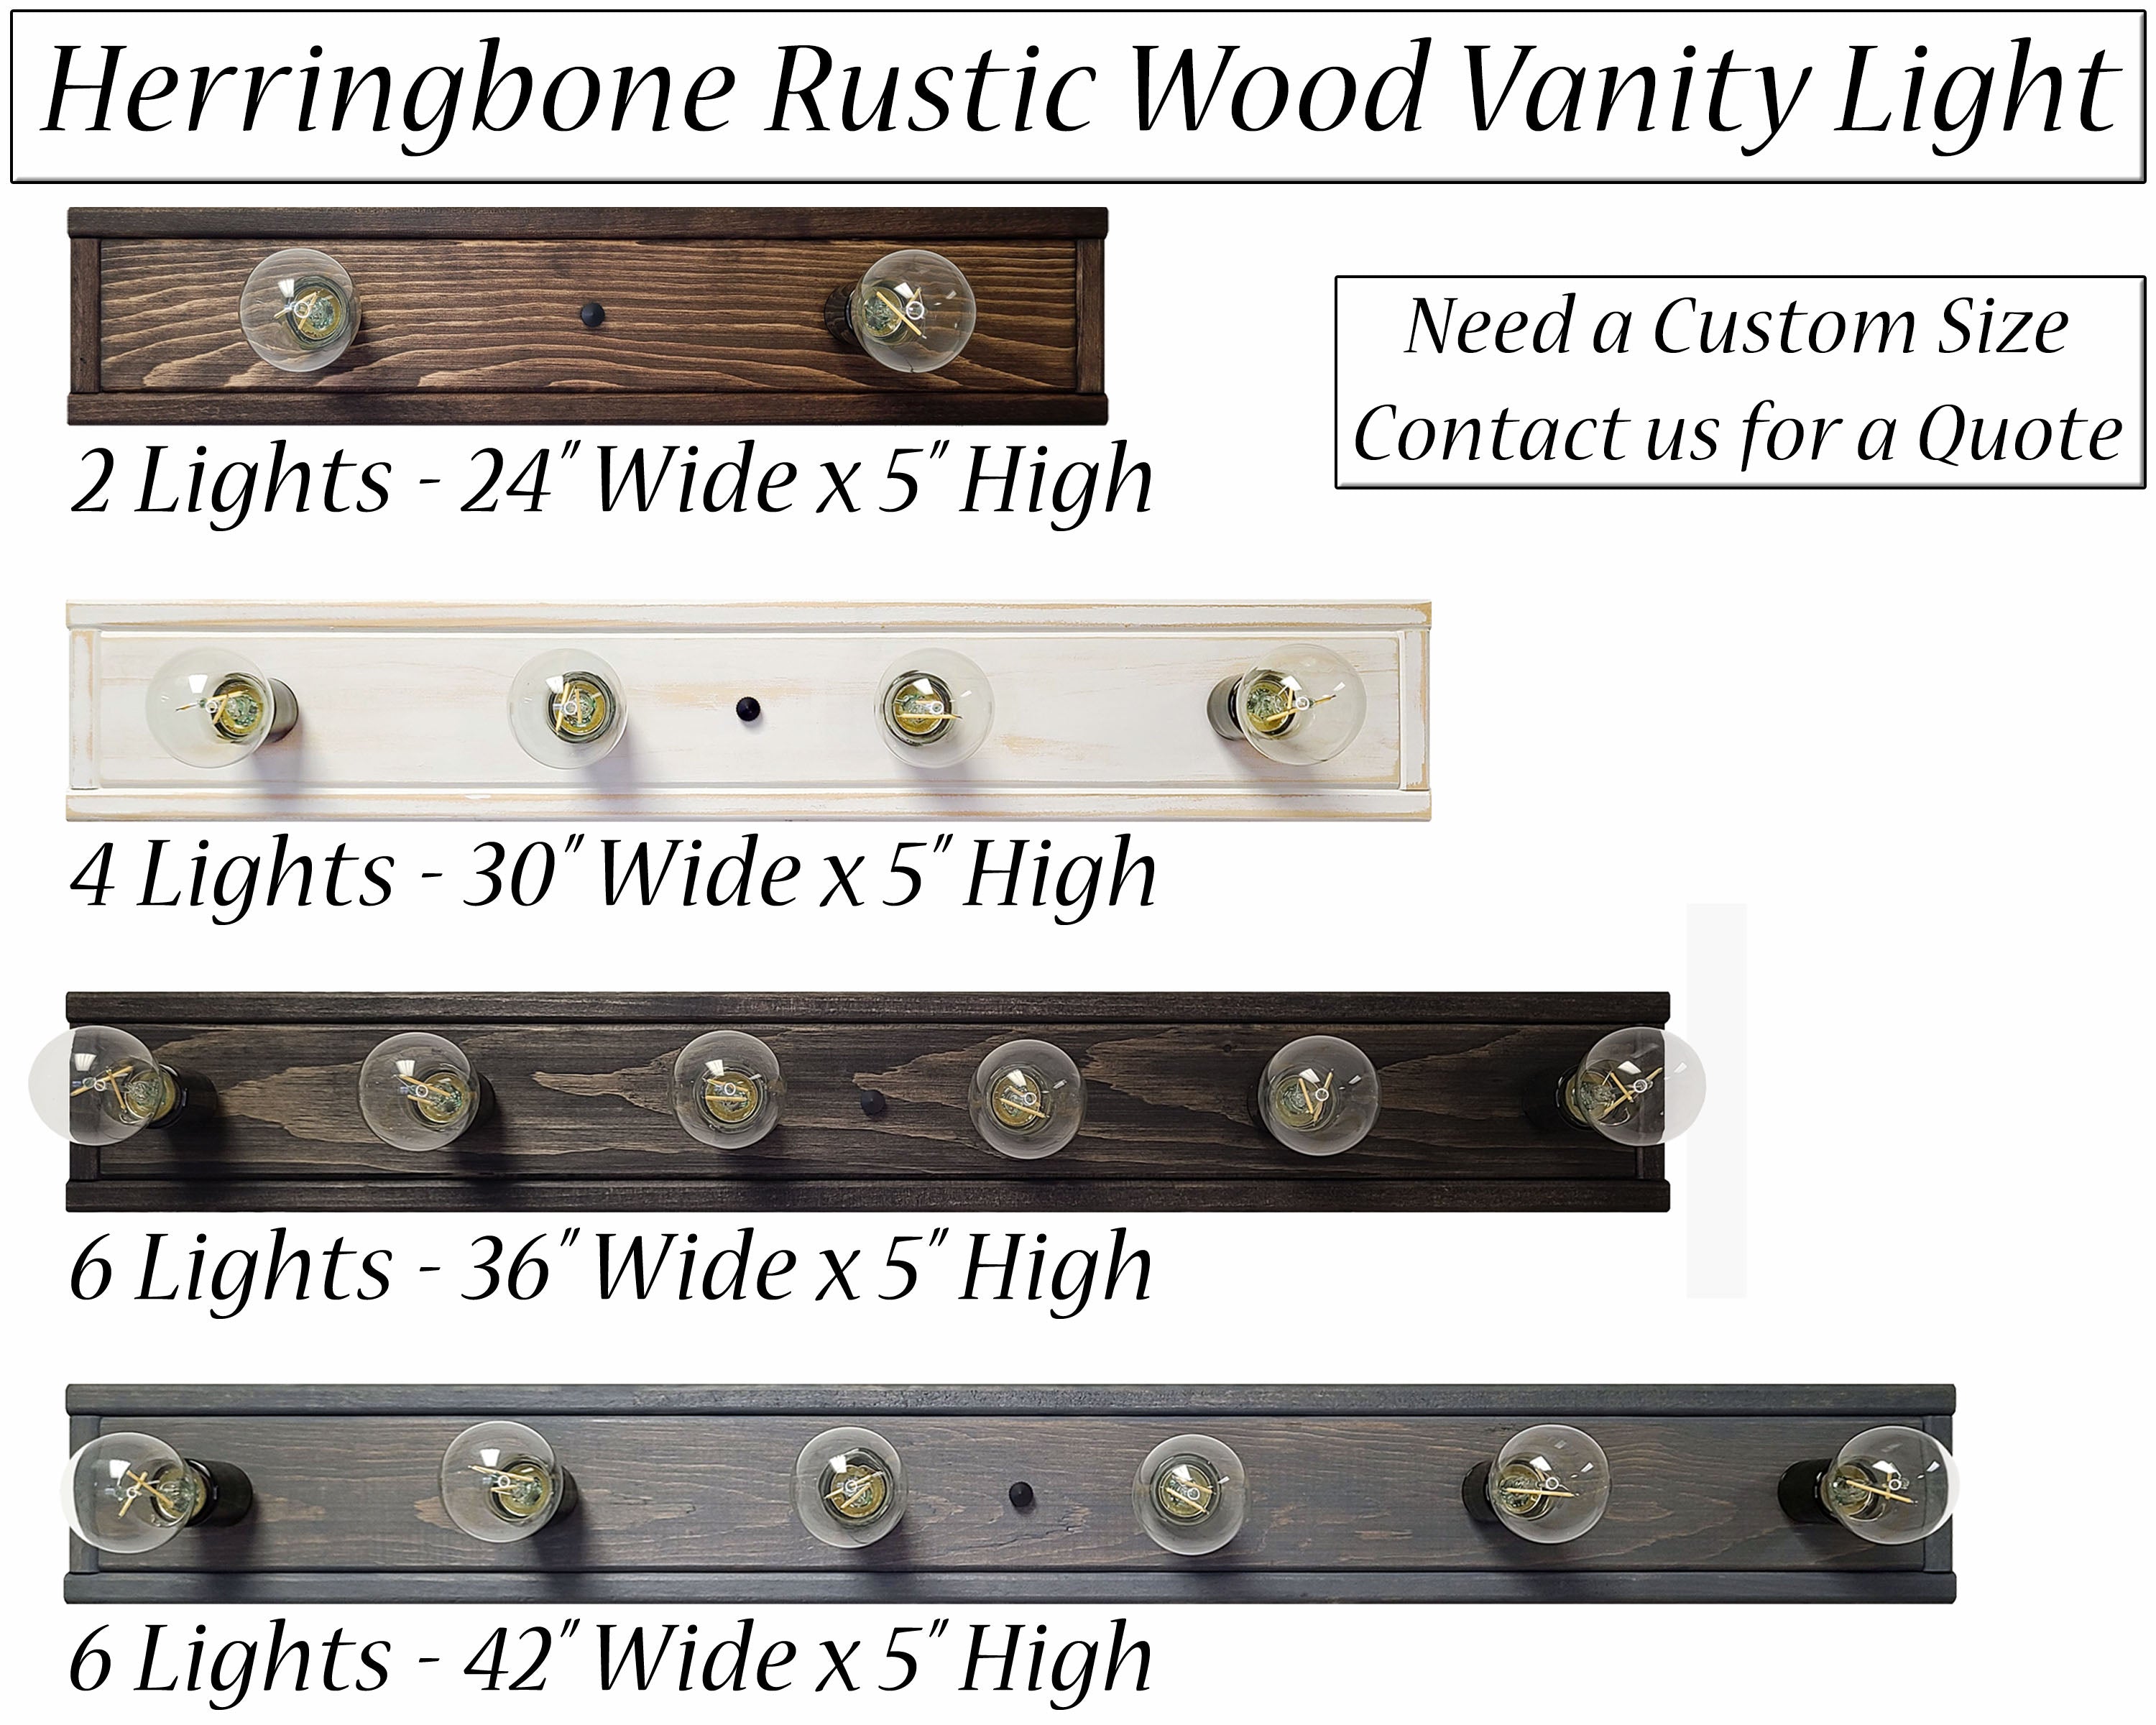 Rustic Herringbone Wood Vanity Lighting - Customizable Sizes and Stains